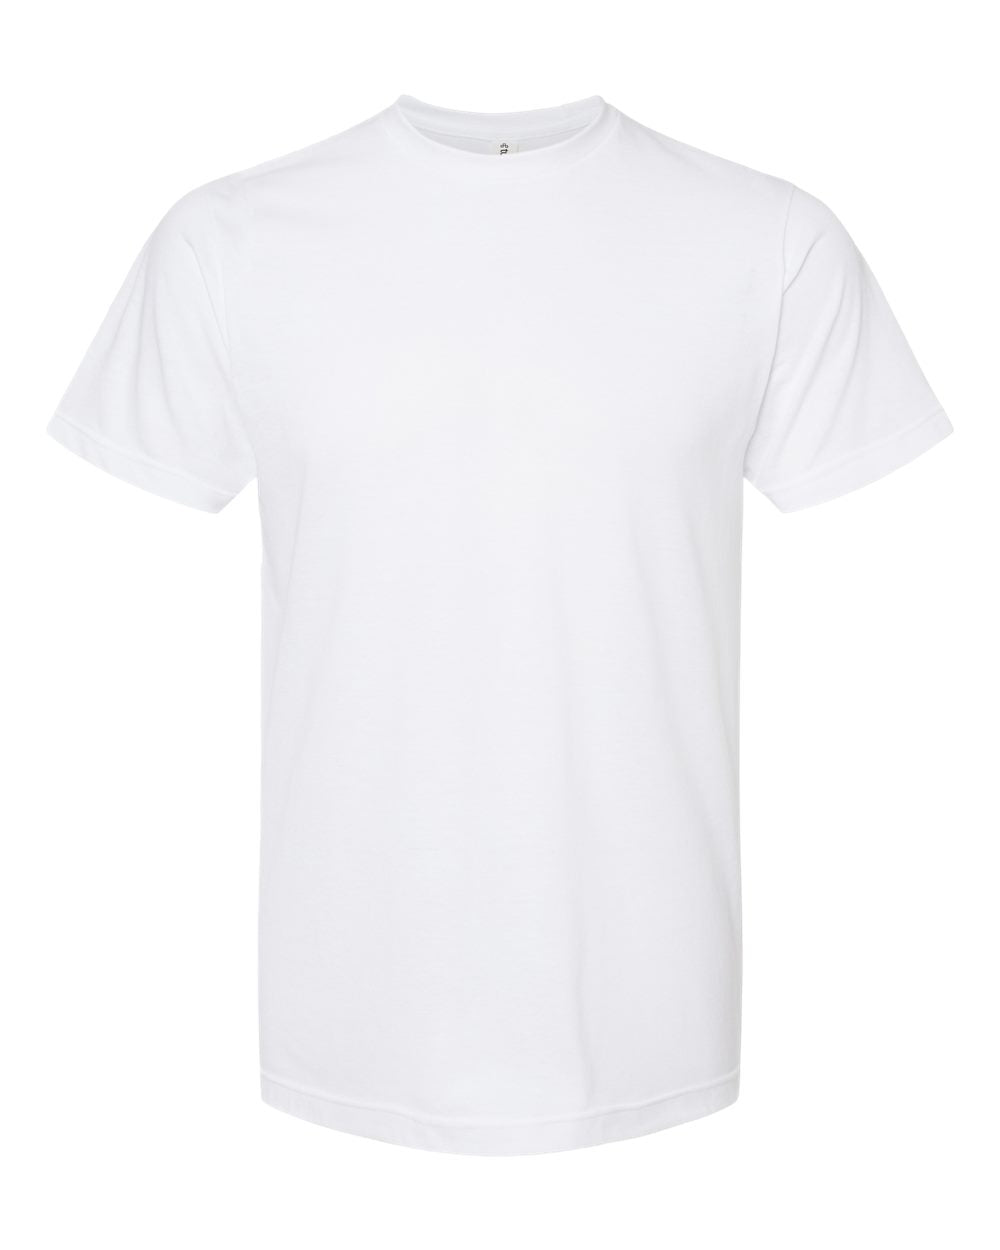 Tultex 241 Adult Shirt - XXL-XXXL